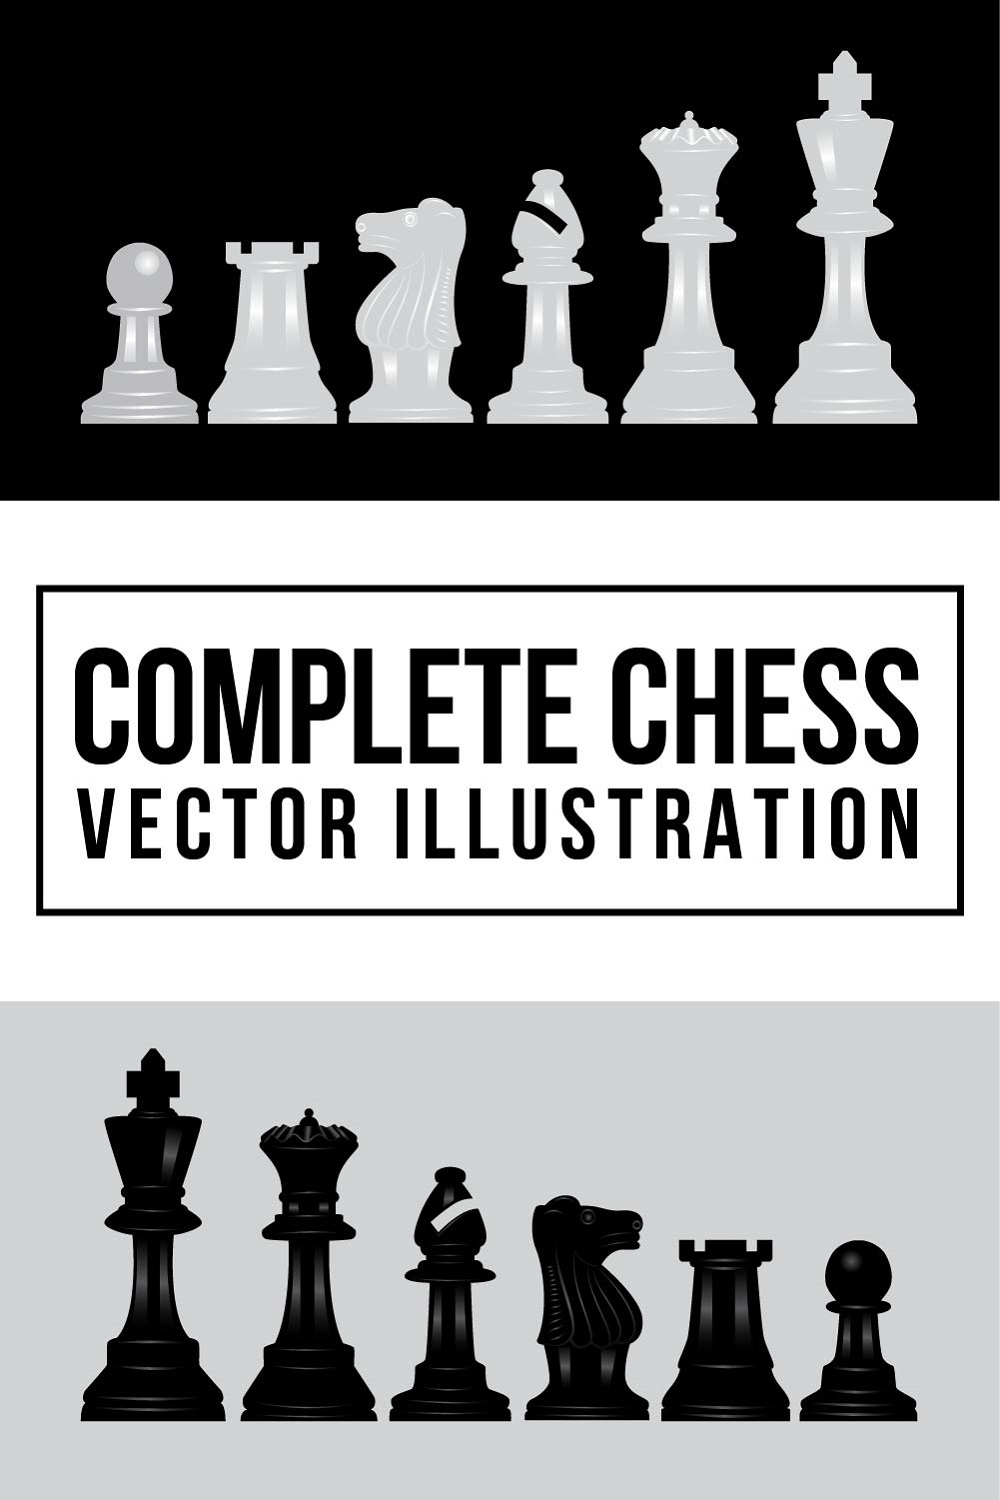 Complete Chess Vector Illustration pinterest image.